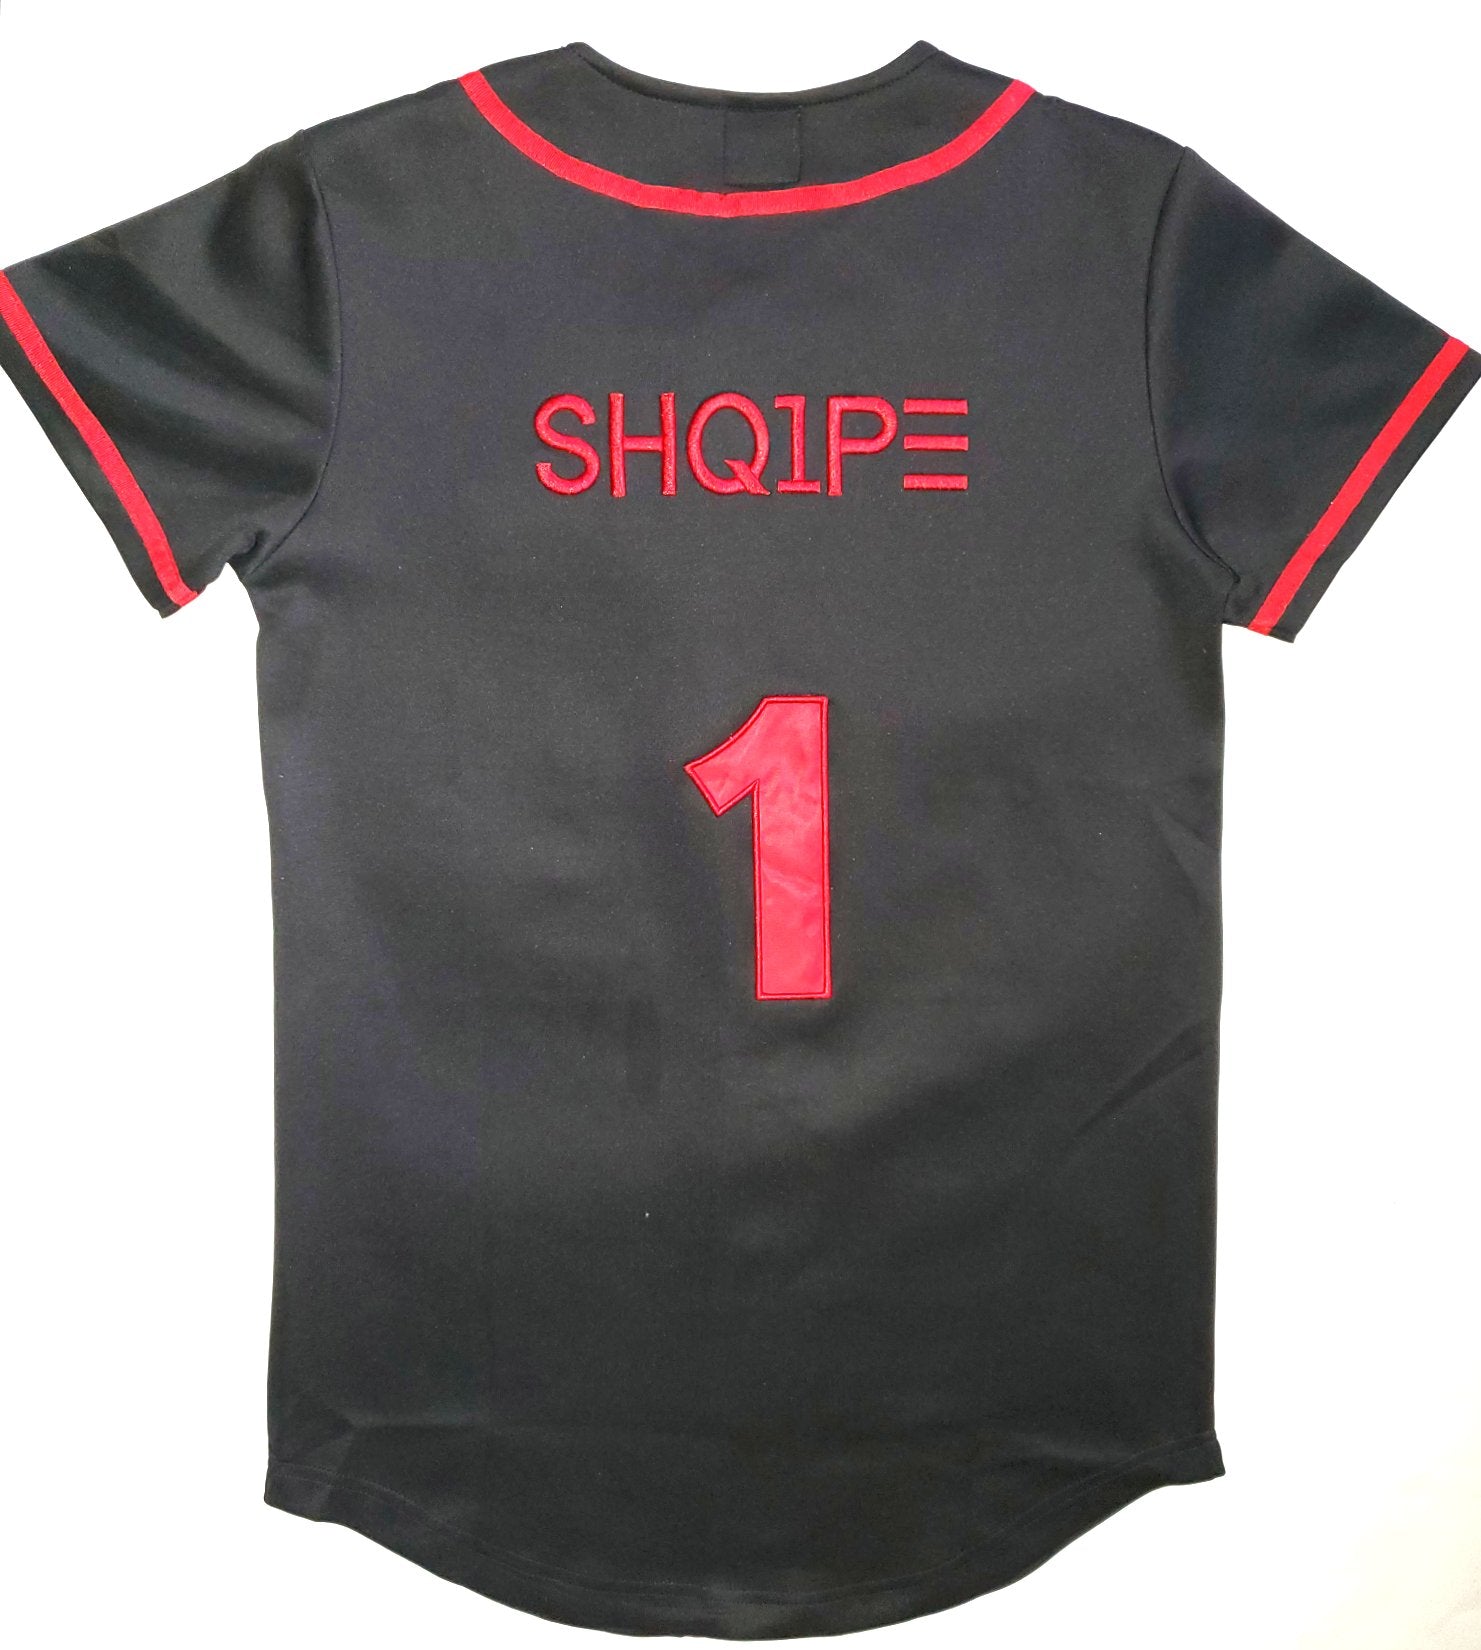 Shq1pe Baseball Jersey-Black